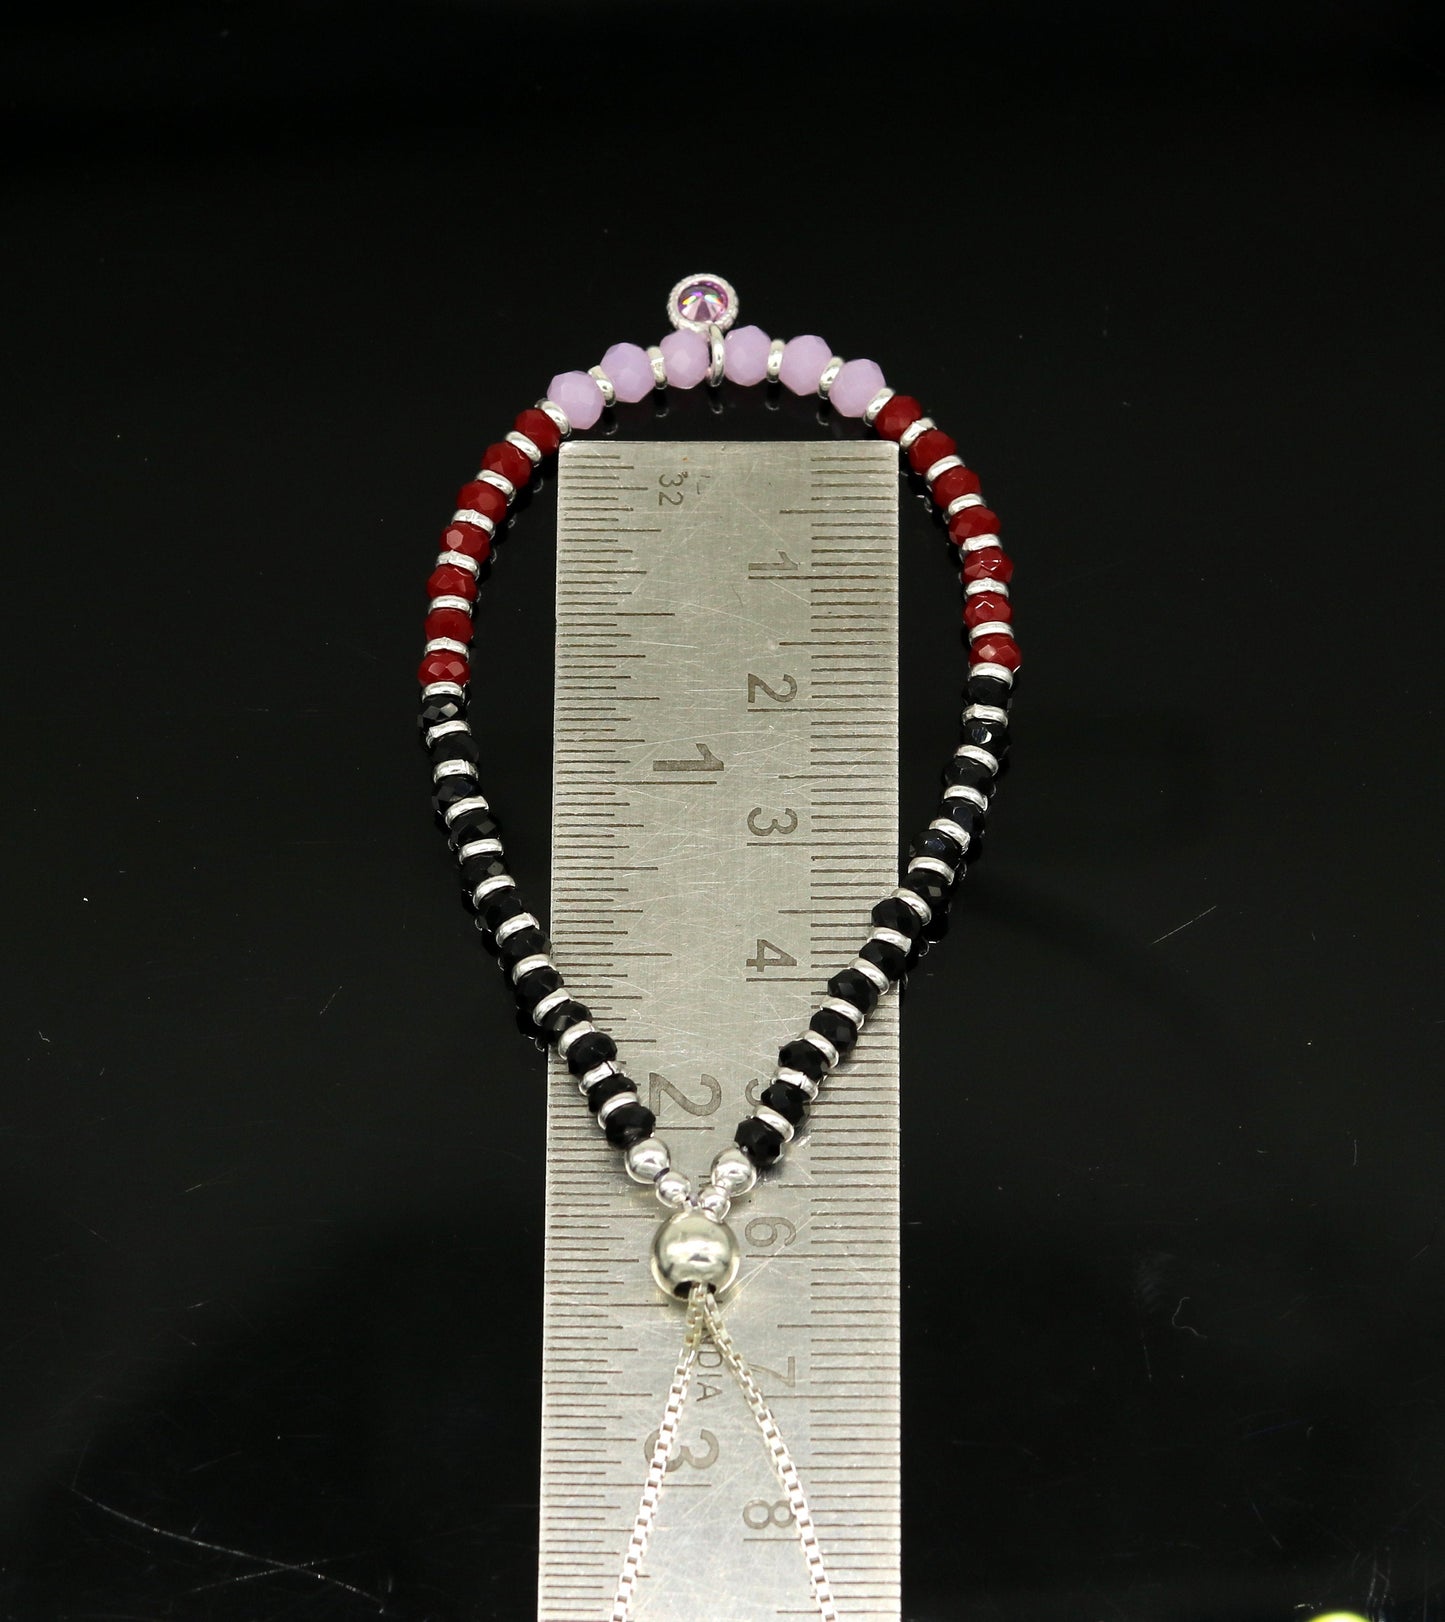 6" 925 sterling silver gorgeous multicolor beads adjustable bracelet, charm bracelet, customized bracelet adjustable girl's jewelry sbr162 - TRIBAL ORNAMENTS